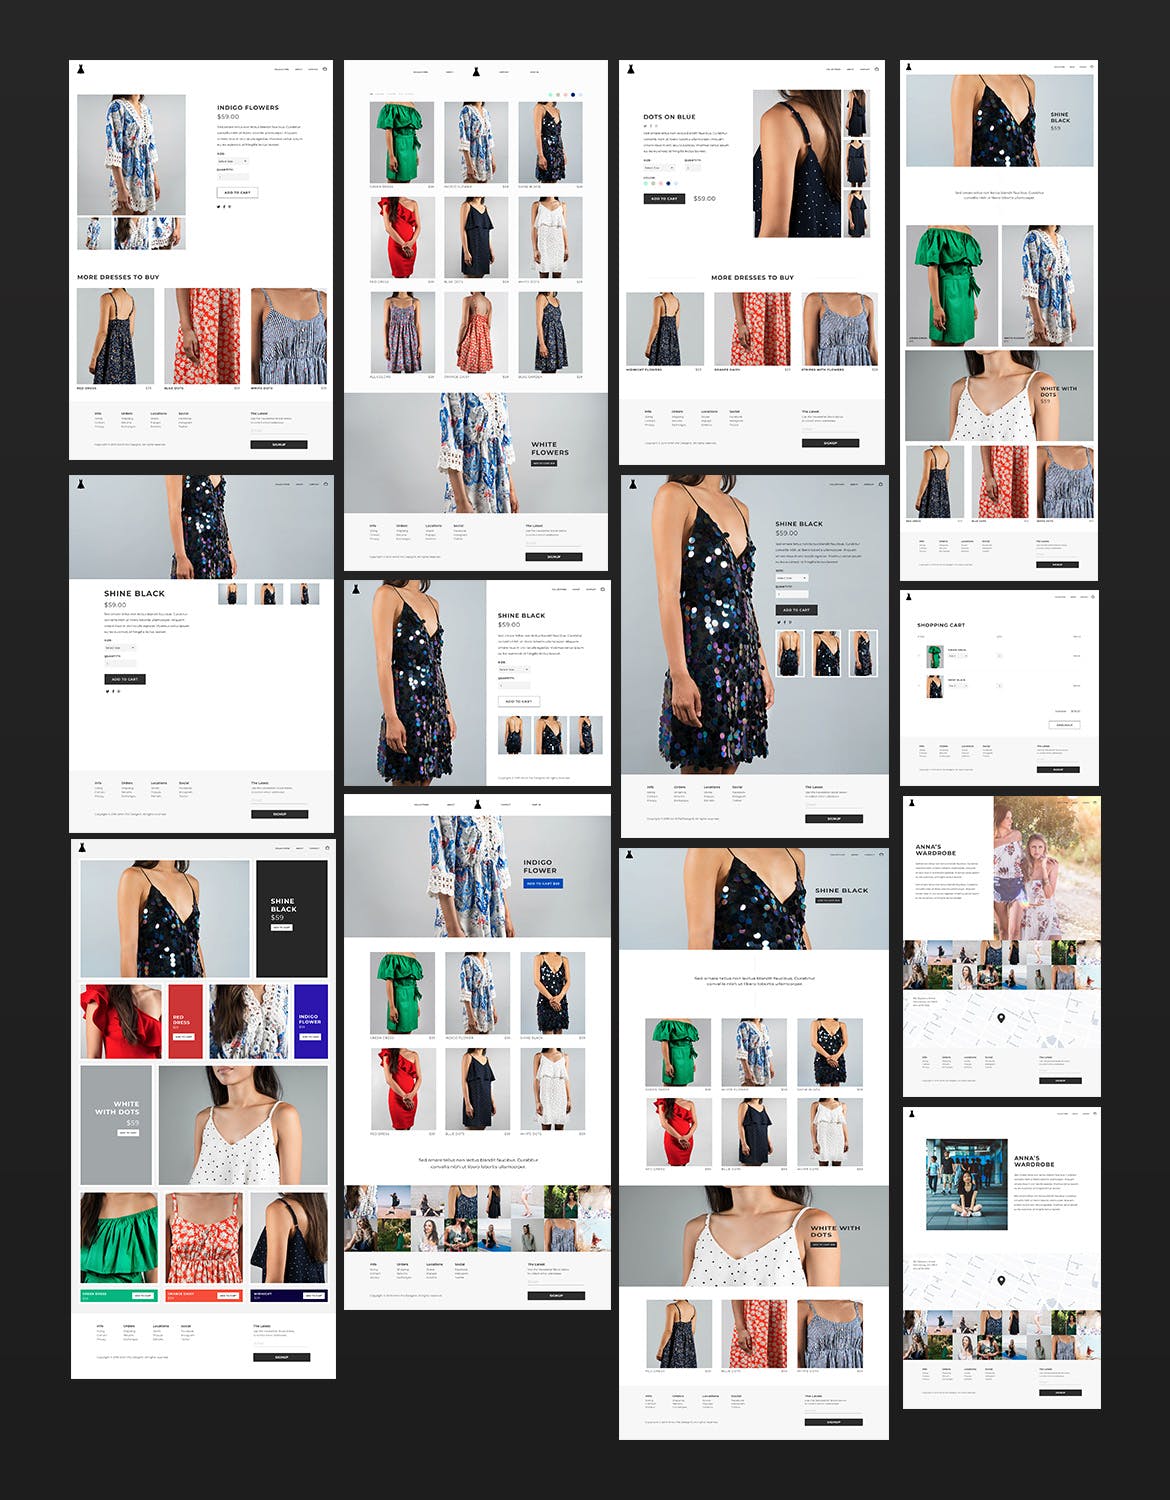 时尚服饰网上商城平台UI设计套件 E-Commerce Fashion Website UI Kit插图(1)